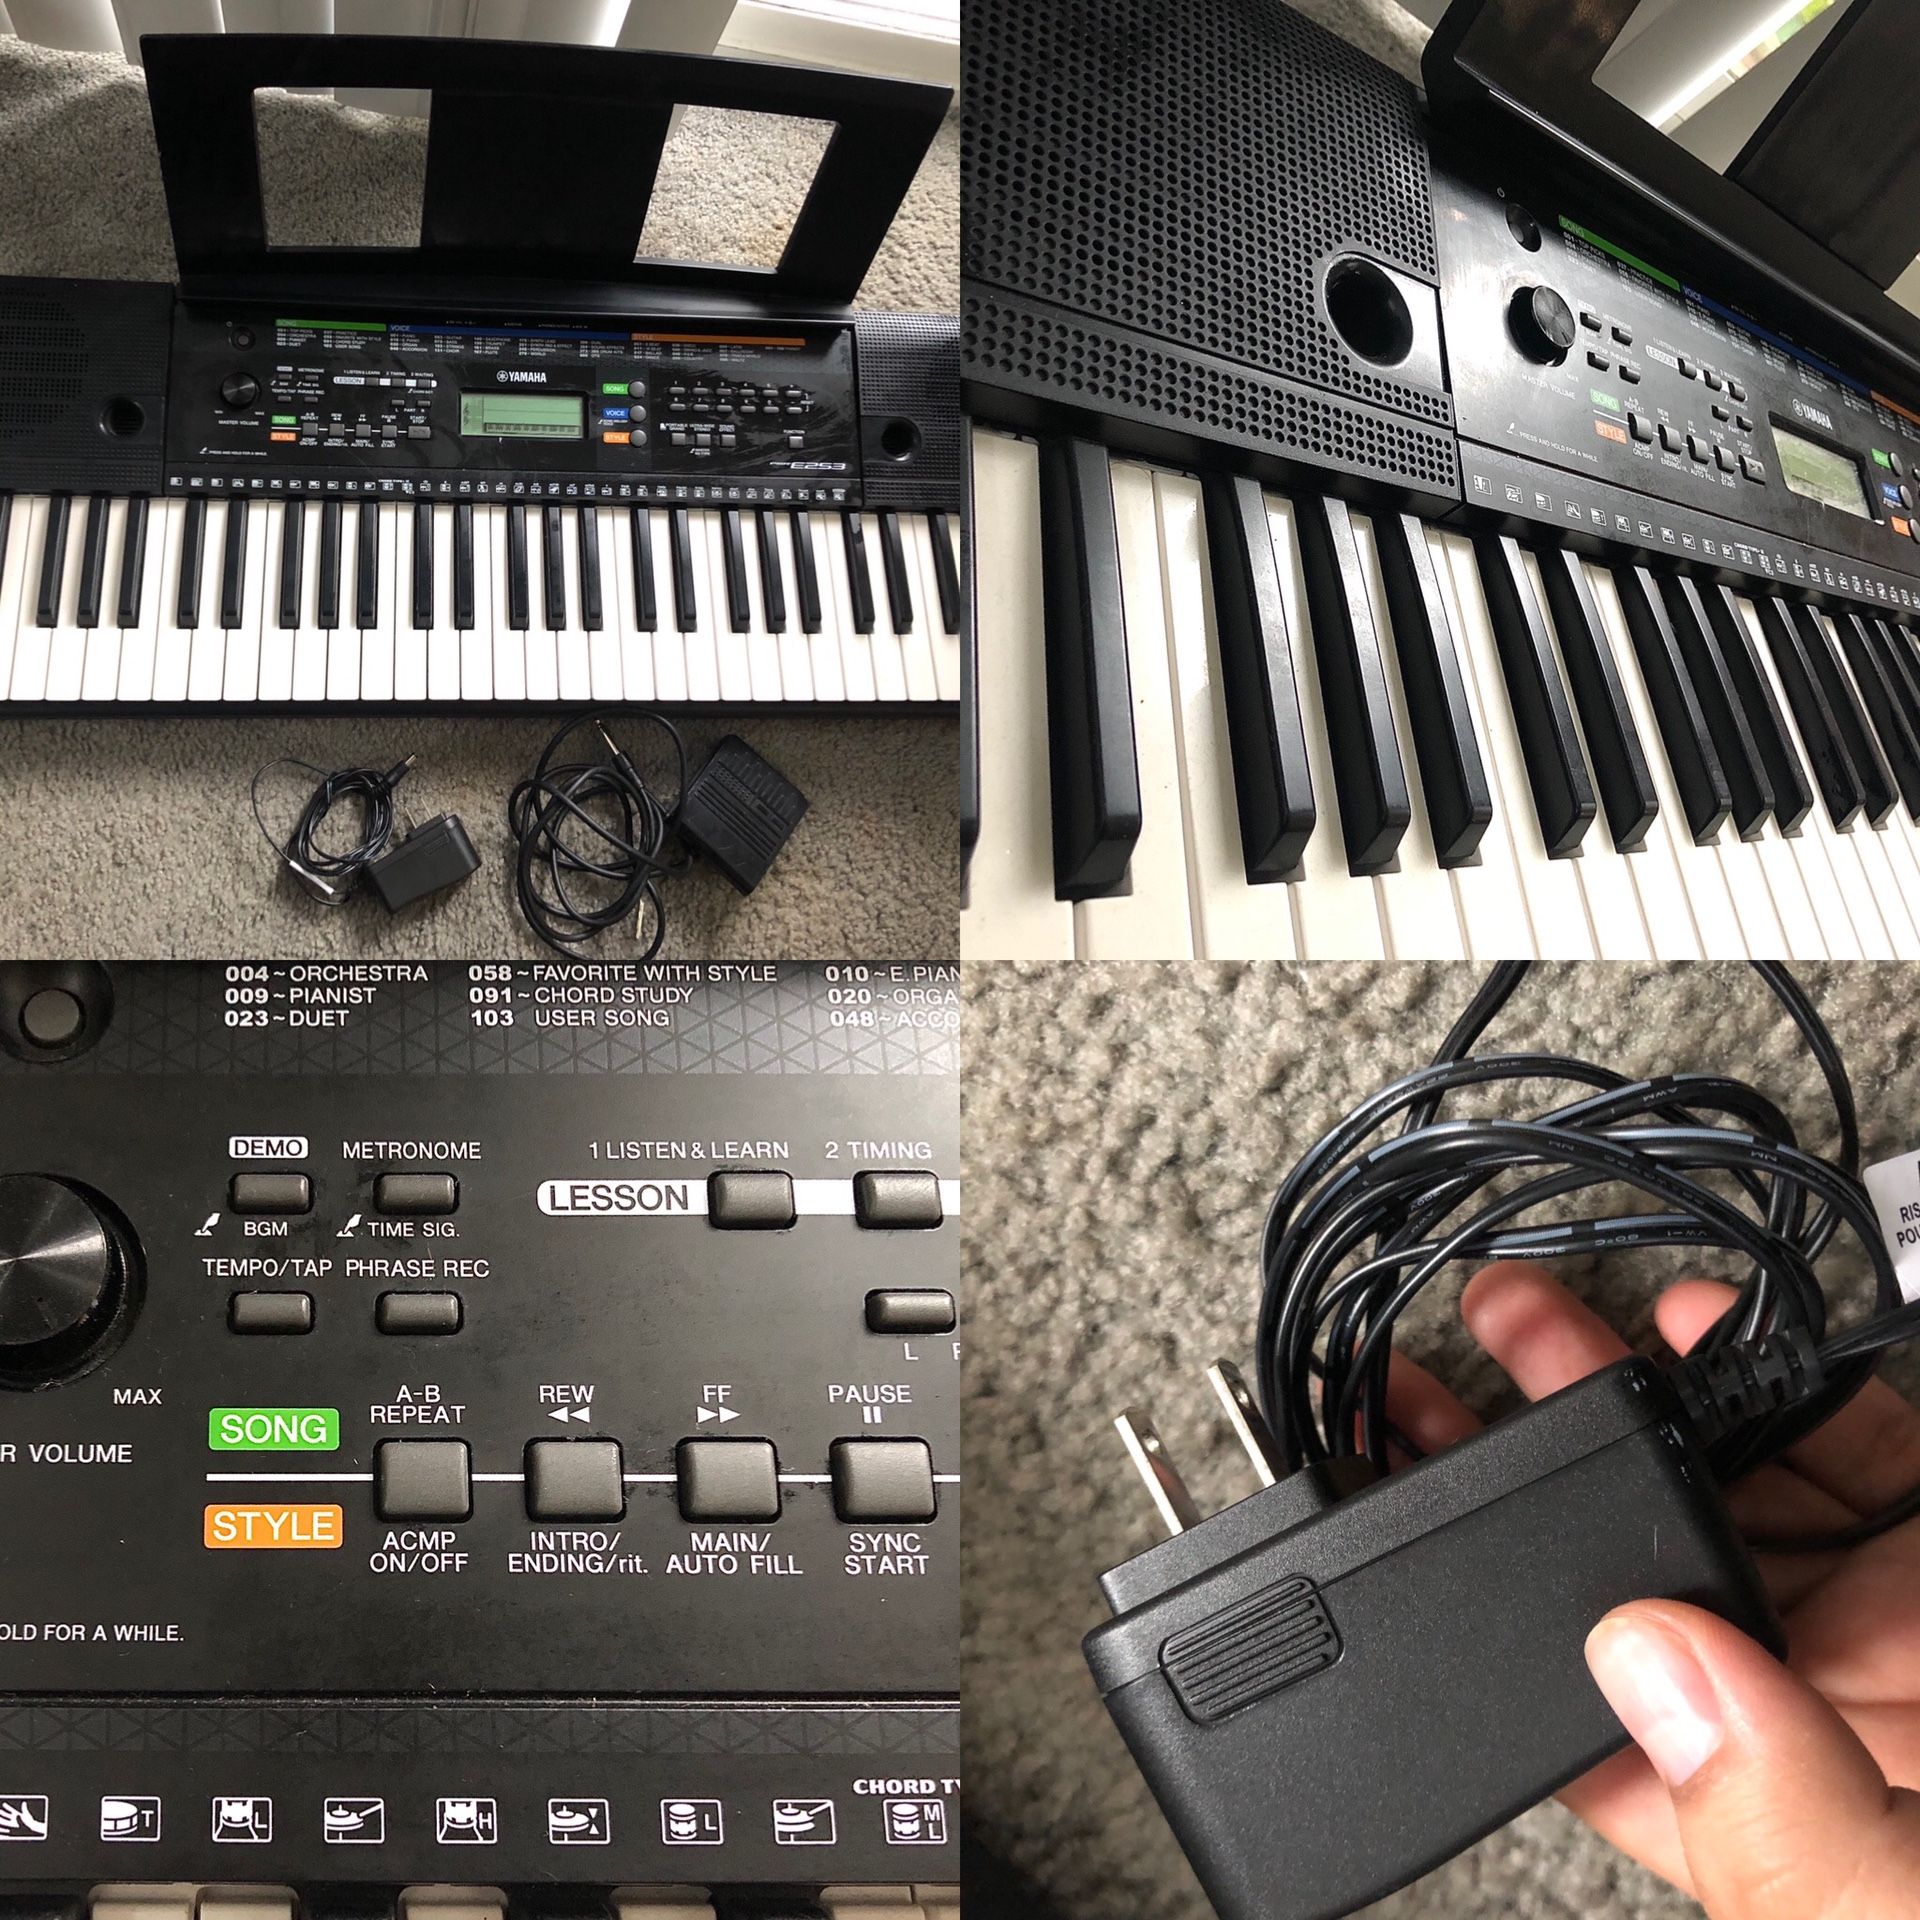 [Good deal] Yamaha PSRE253 61-Key Portable Keyboard